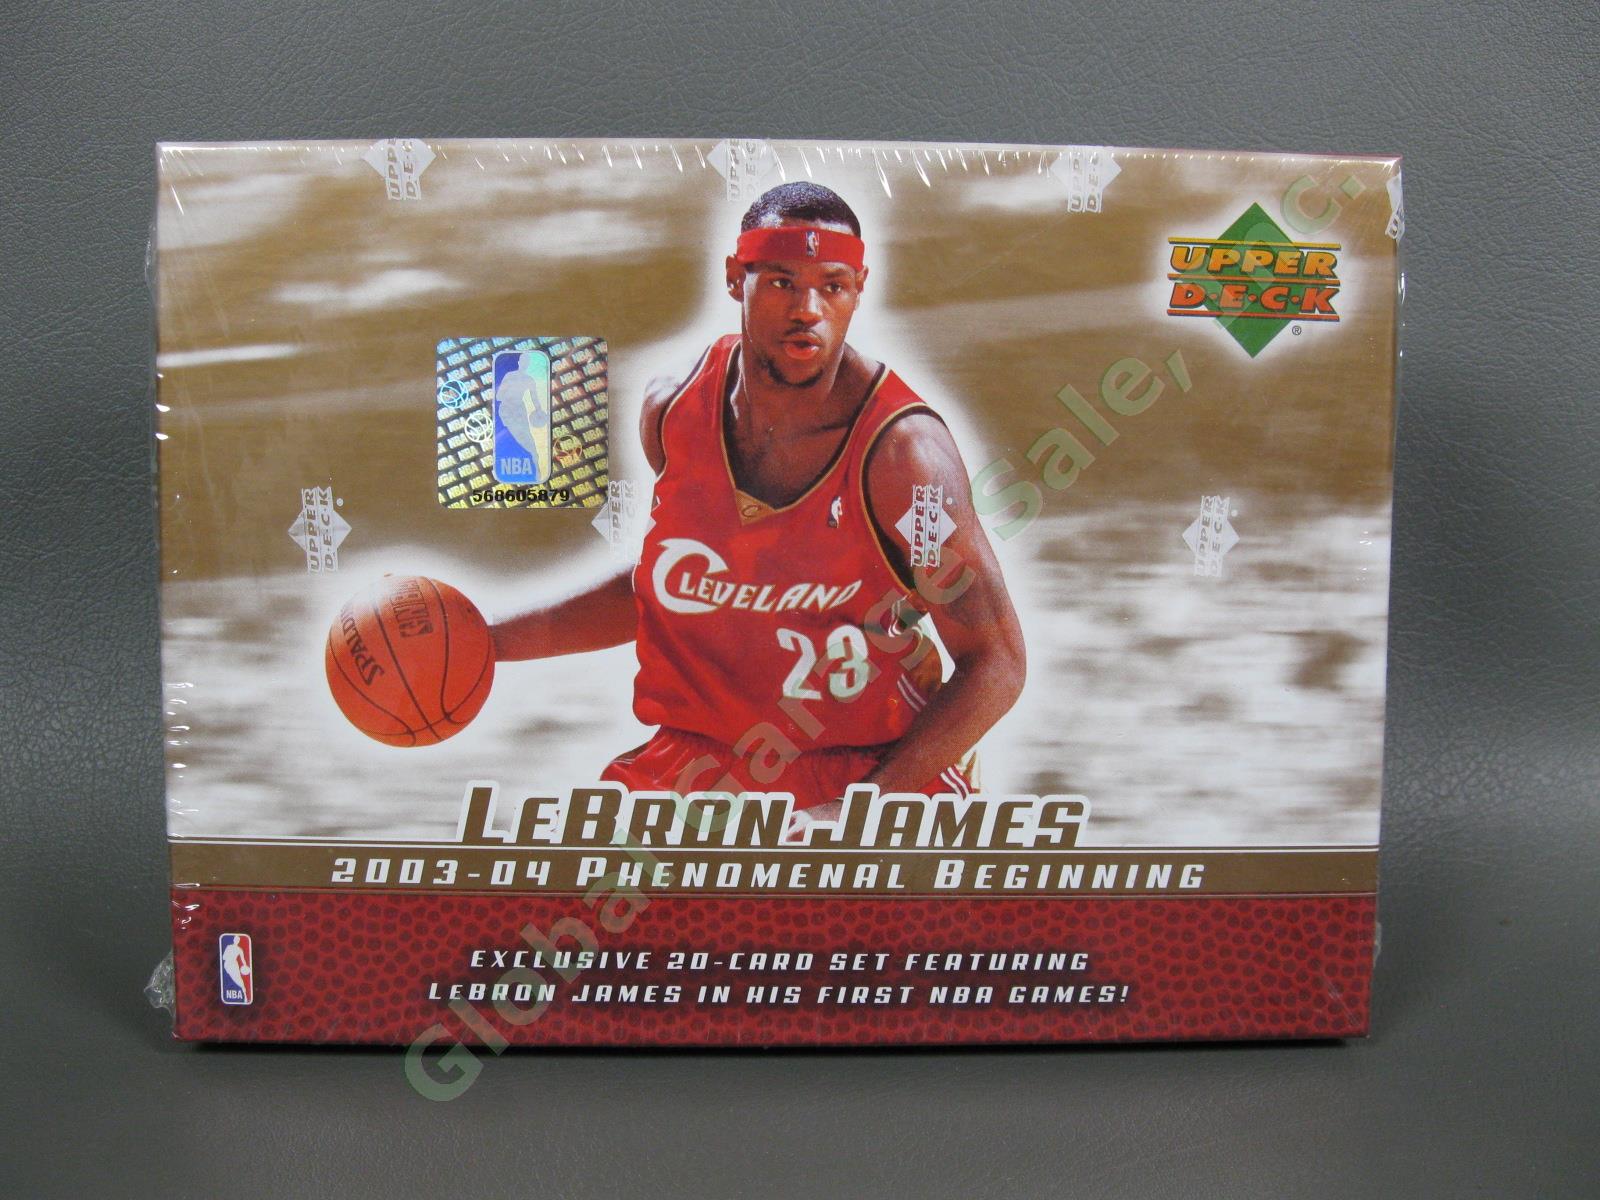 2003-04 LeBron James Upper Deck SEALED Phenomenal Beginning 20 Card Rookie Set